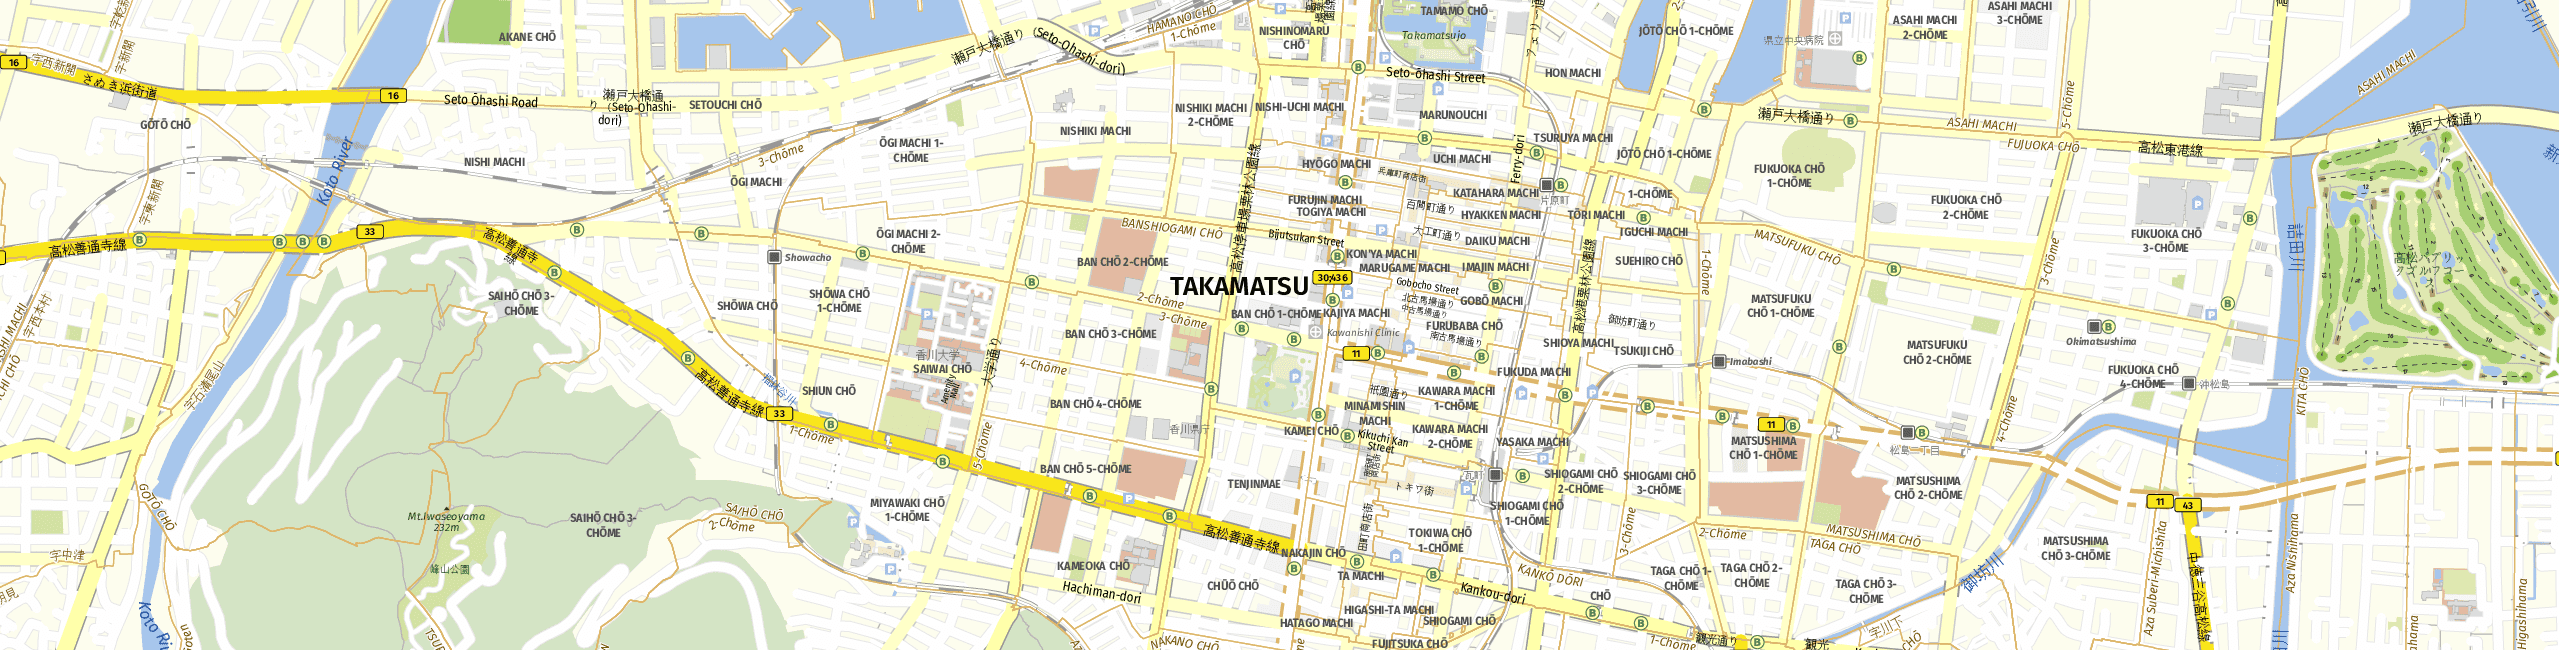 Stadtplan Takamatsu zum Downloaden.